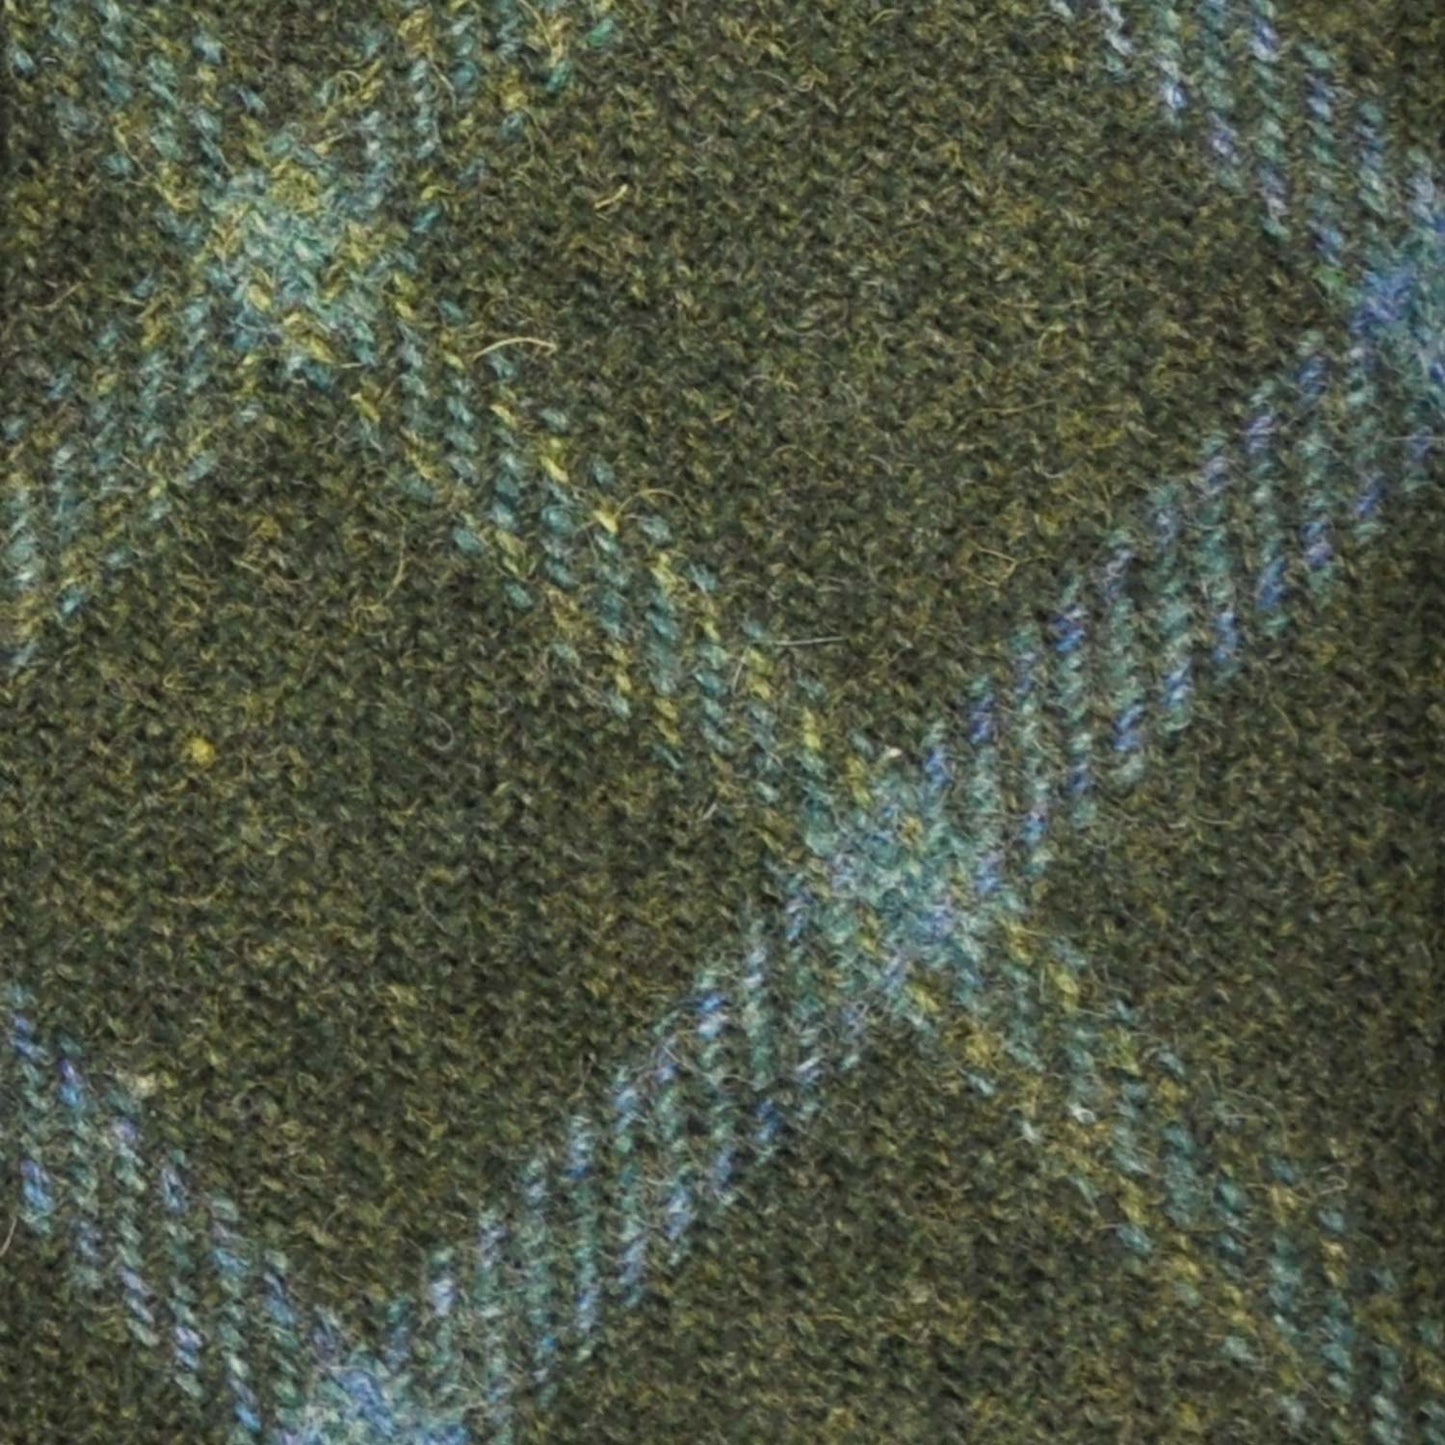 Load image into Gallery viewer, F.Marino Tweed Tie 3 Folds Windowpane Rifle Green-Wools Boutique Uomo
